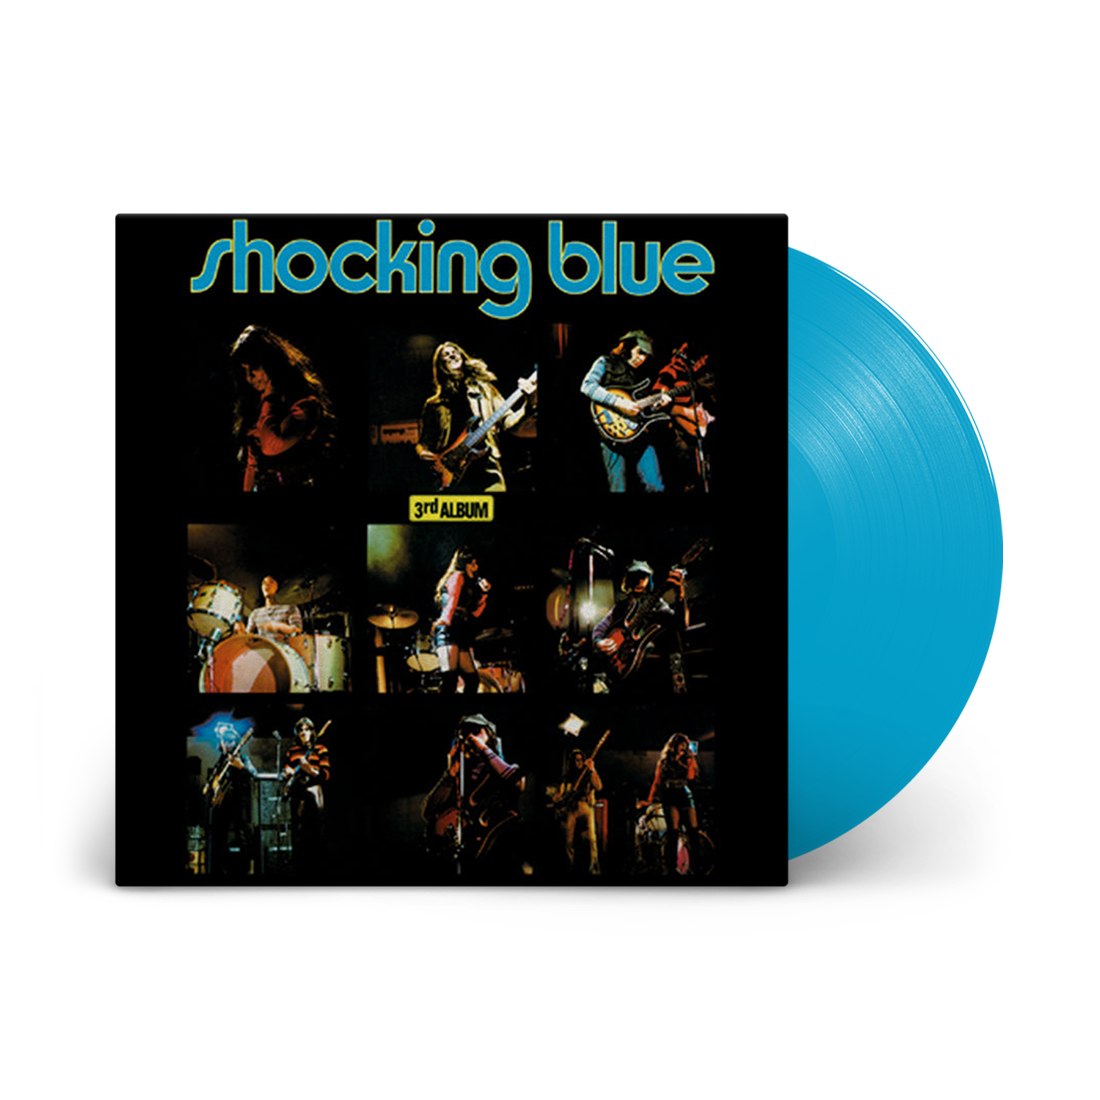 Shocking Blue - 3rd Album: Limited Edition Turquoise Vinyl LP